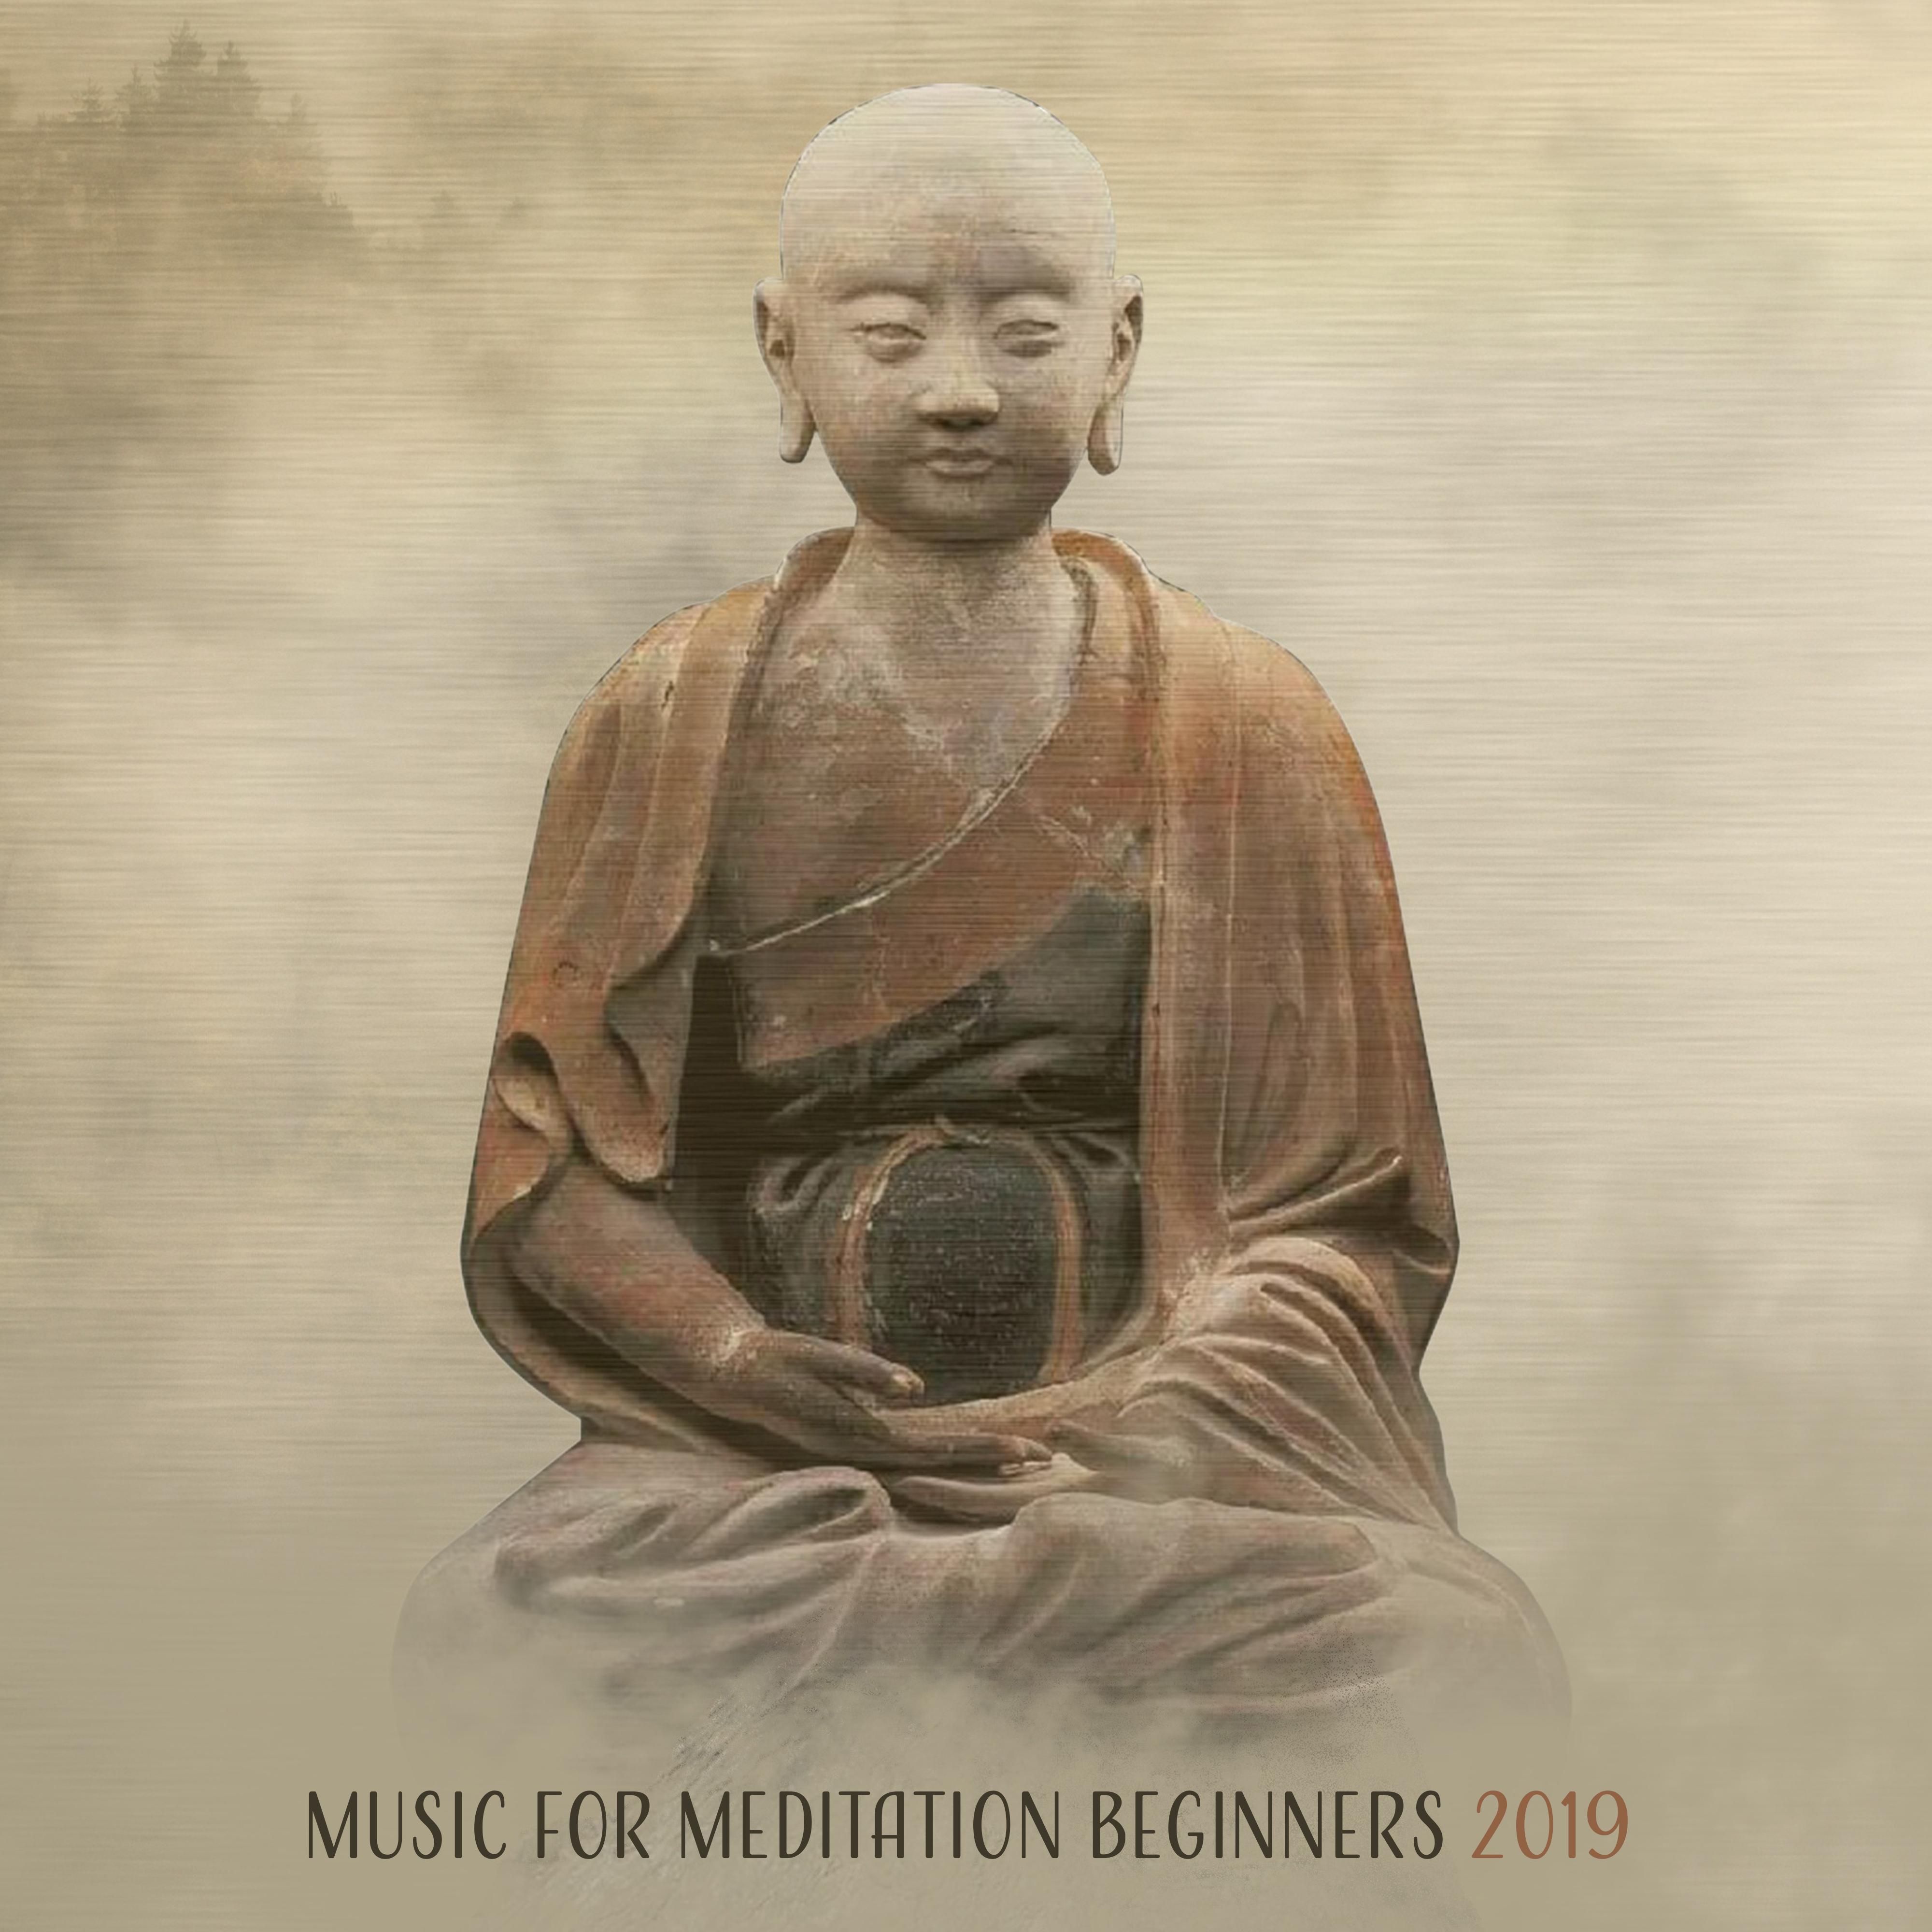 Music for Meditation Beginners 2019 – 15 New Age Songs to Practice Yoga Positions, Full Relax & Inner Calmness